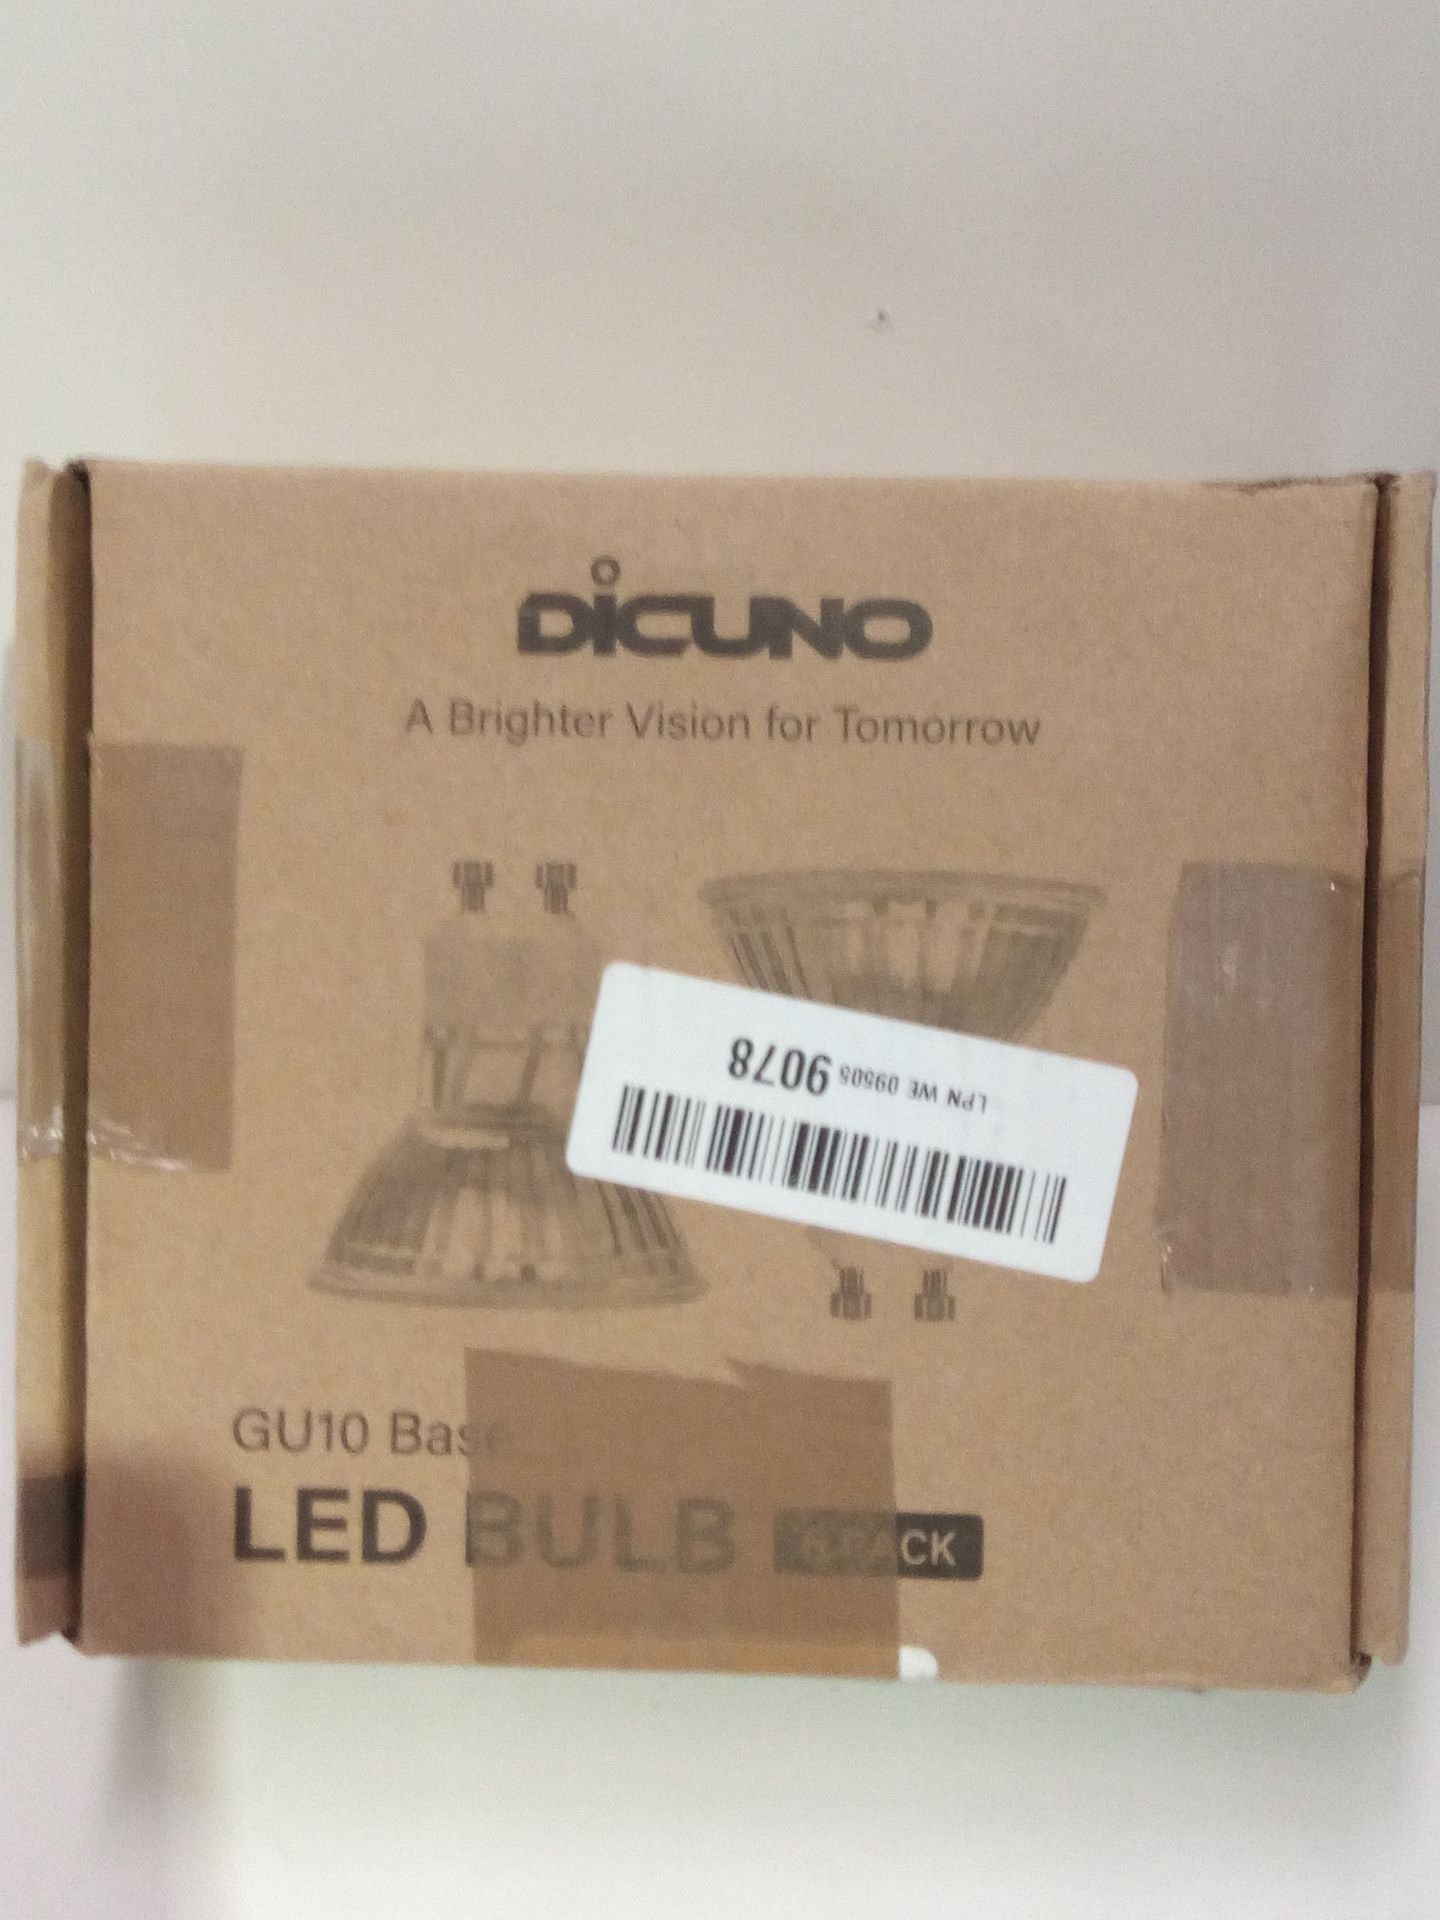 RRP £14.42 DiCUNO GU10 LED Bulb - Image 2 of 2